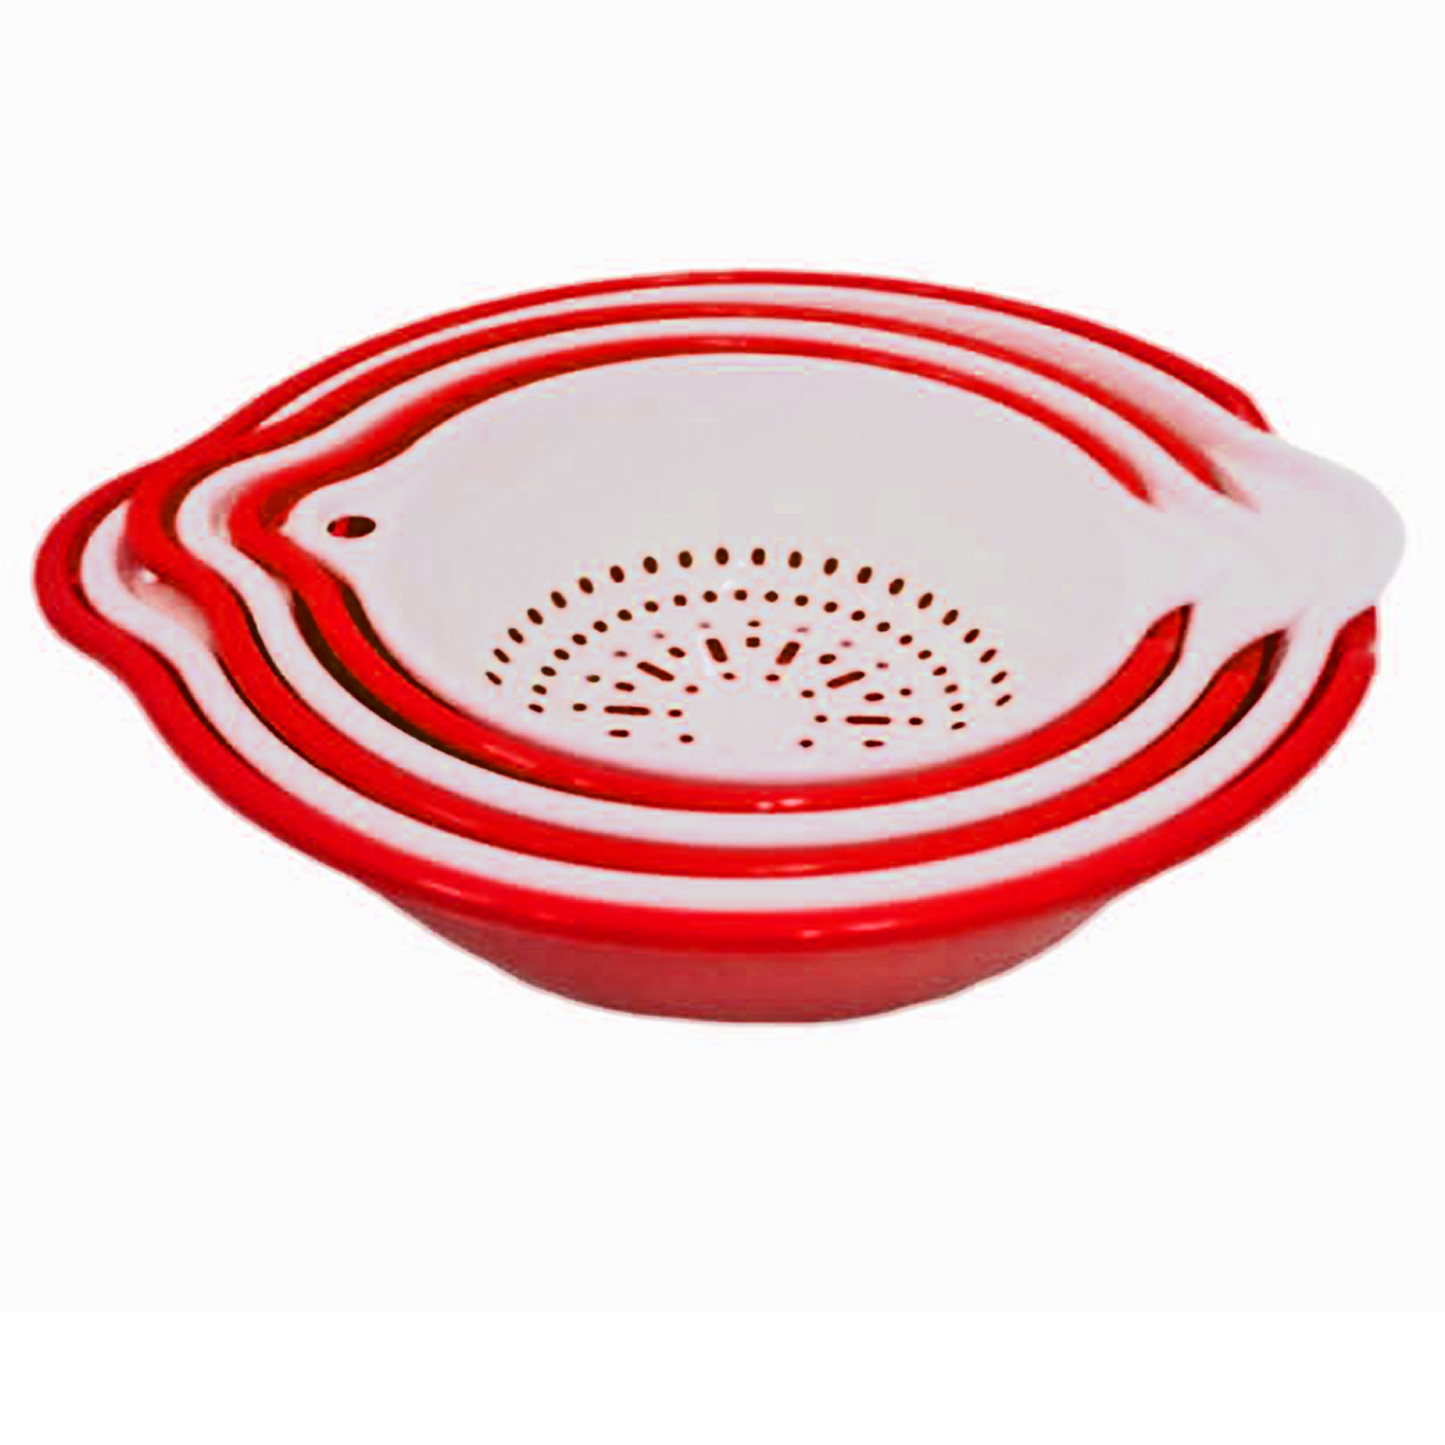 6 Pieces Red Kitchen Colander & Mixing Bowl Set